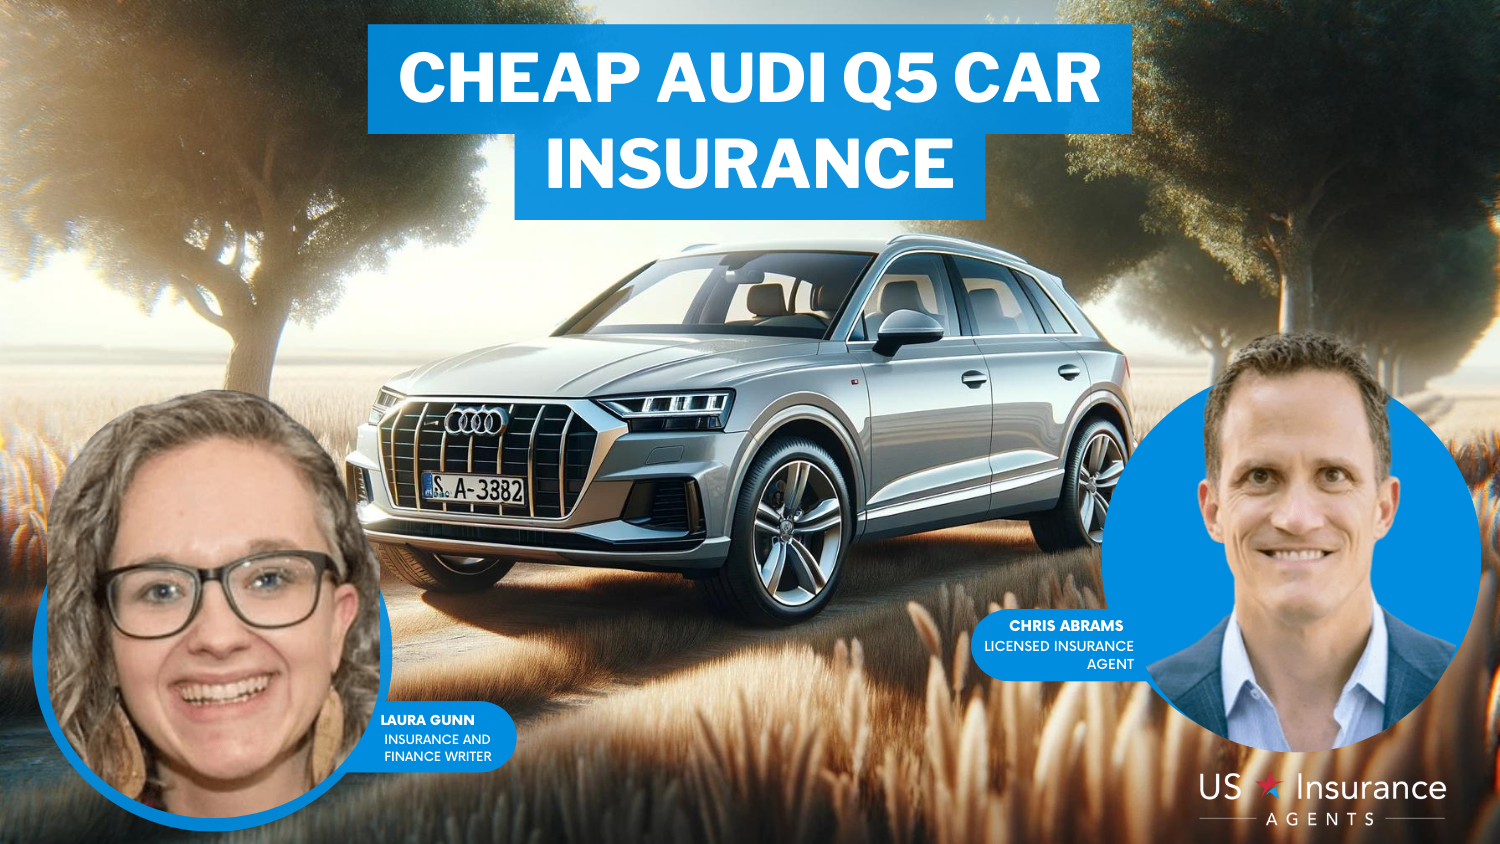 Progressive, Allstate, and USAA: Cheap Audi Q5 Car Insurance